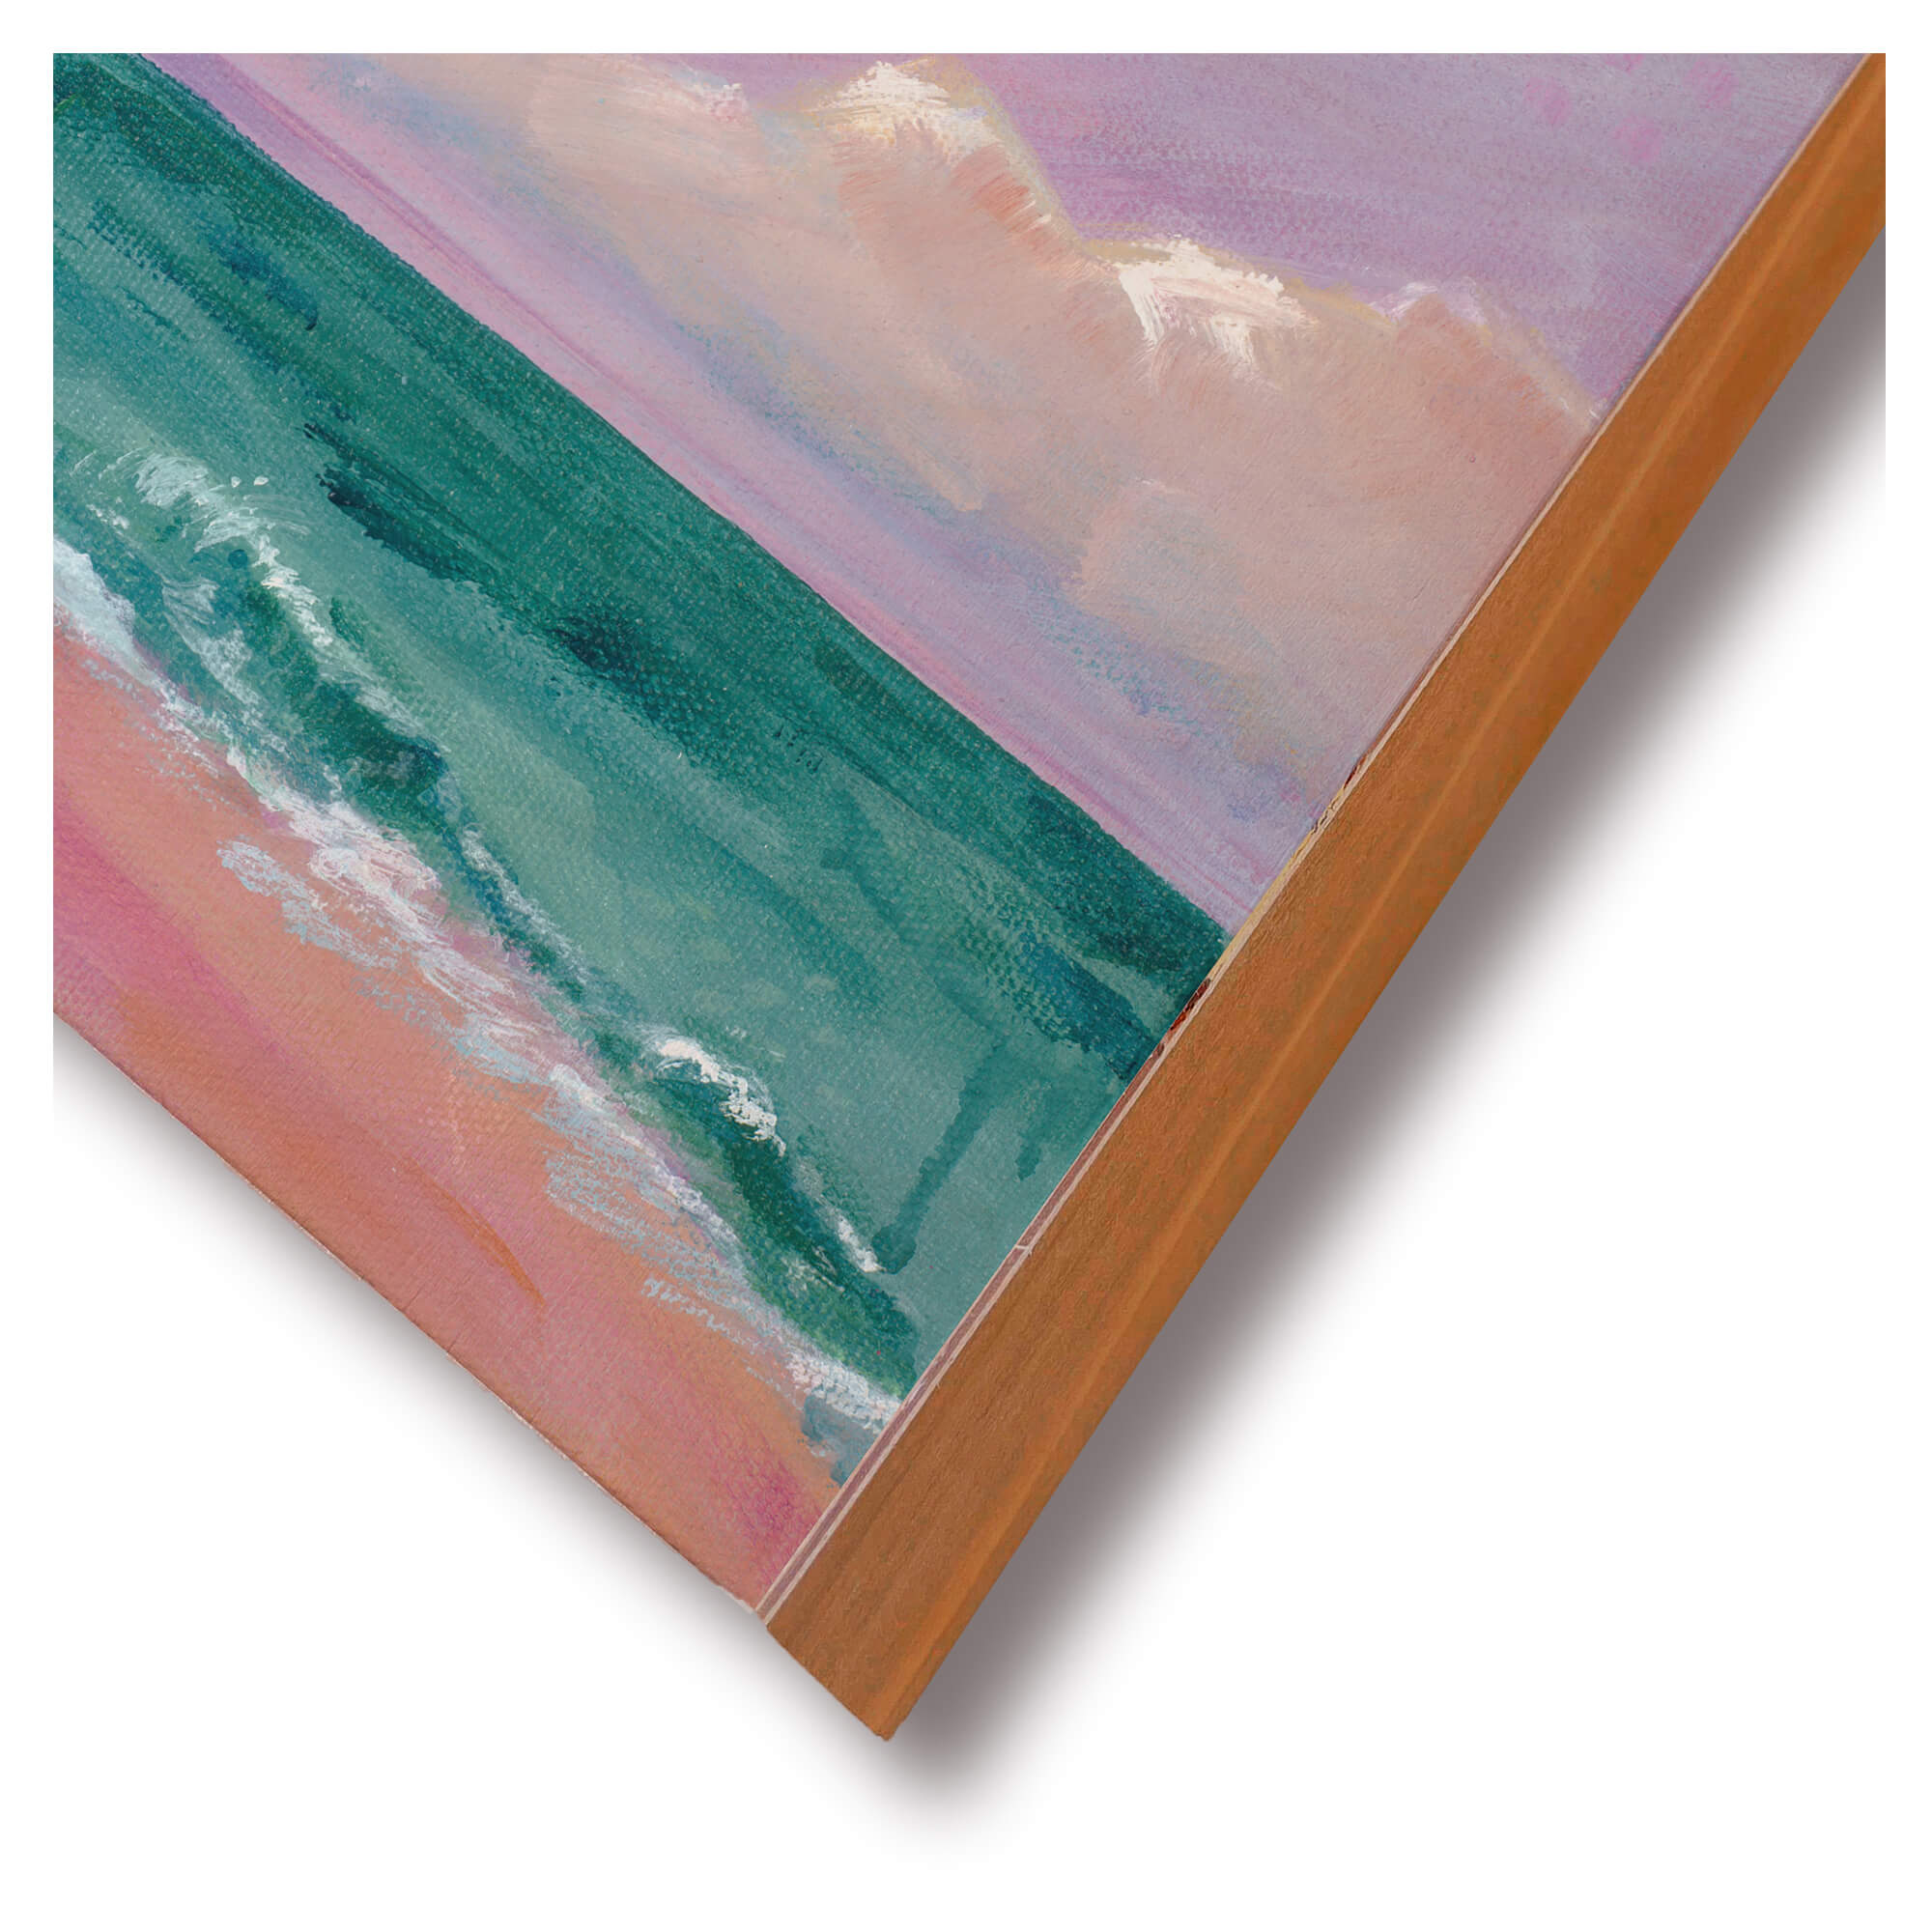 Teal-hued seascape and horizon by Hawaii artist Lindsay Wilkins